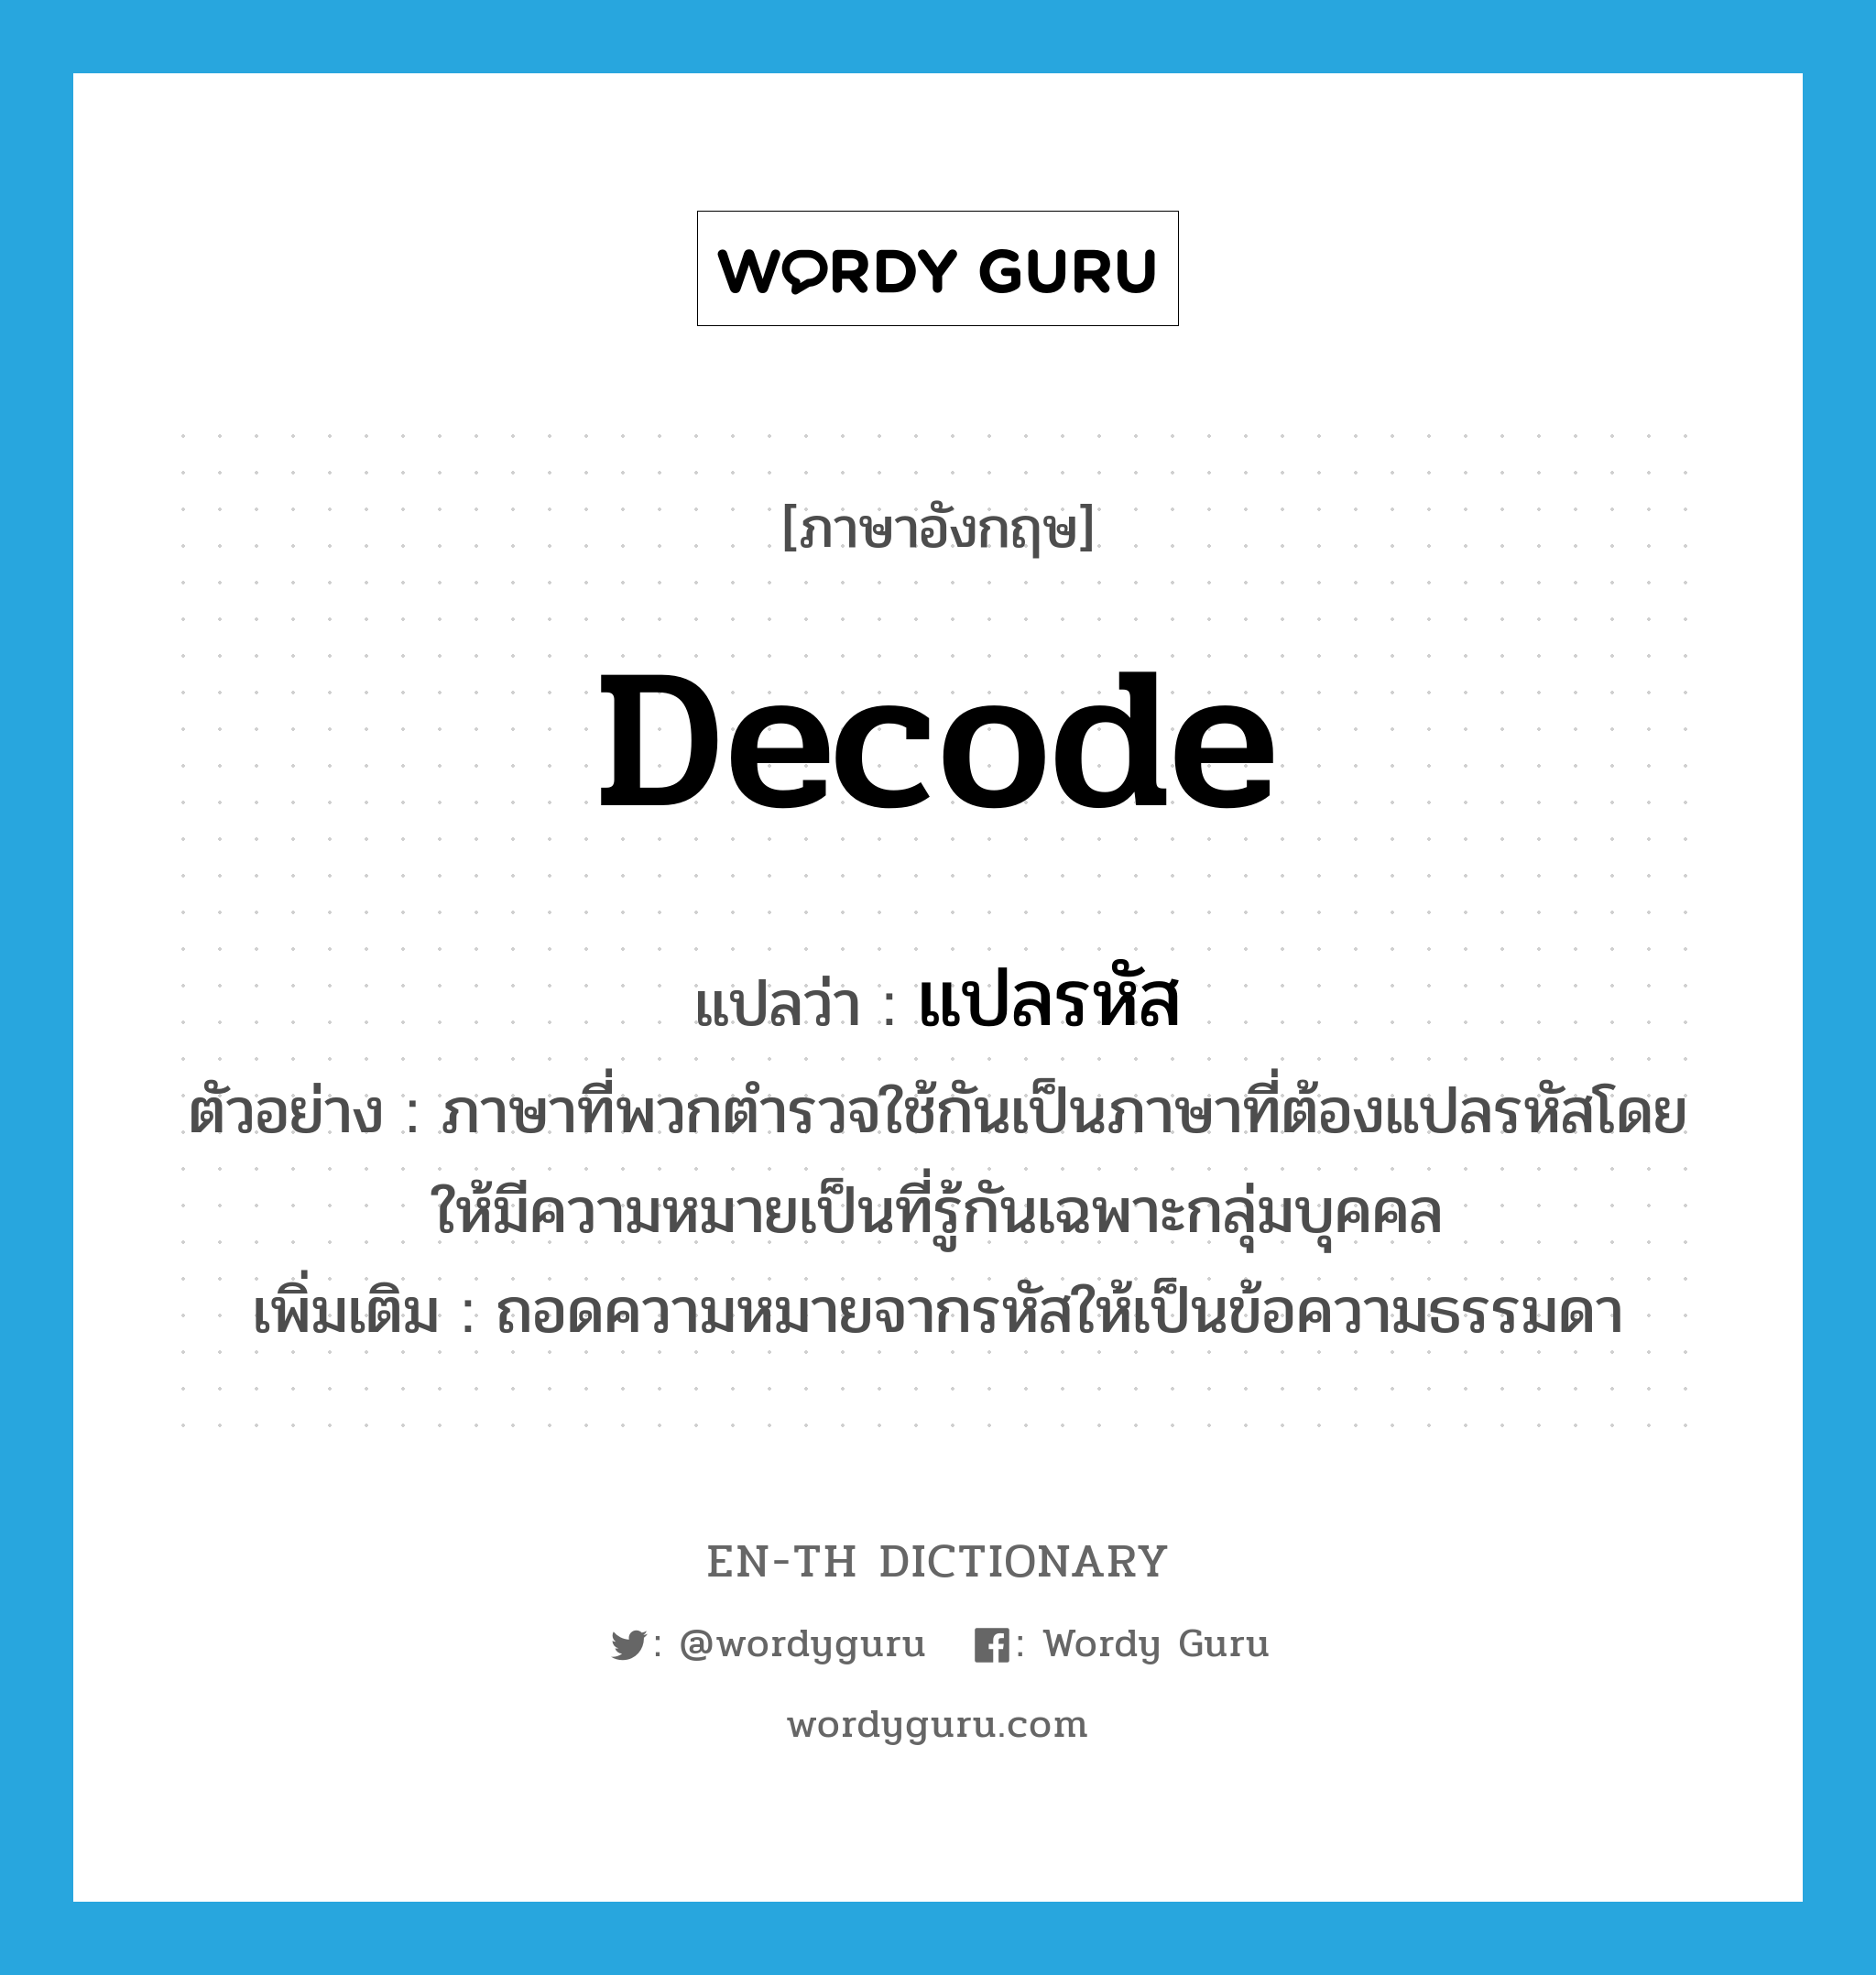 decode แปลว่า?, คำศัพท์ภาษาอังกฤษ decode แปลว่า แปลรหัส ประเภท V ตัวอย่าง ภาษาที่พวกตำรวจใช้กันเป็นภาษาที่ต้องแปลรหัสโดยให้มีความหมายเป็นที่รู้กันเฉพาะกลุ่มบุคคล เพิ่มเติม ถอดความหมายจากรหัสให้เป็นข้อความธรรมดา หมวด V